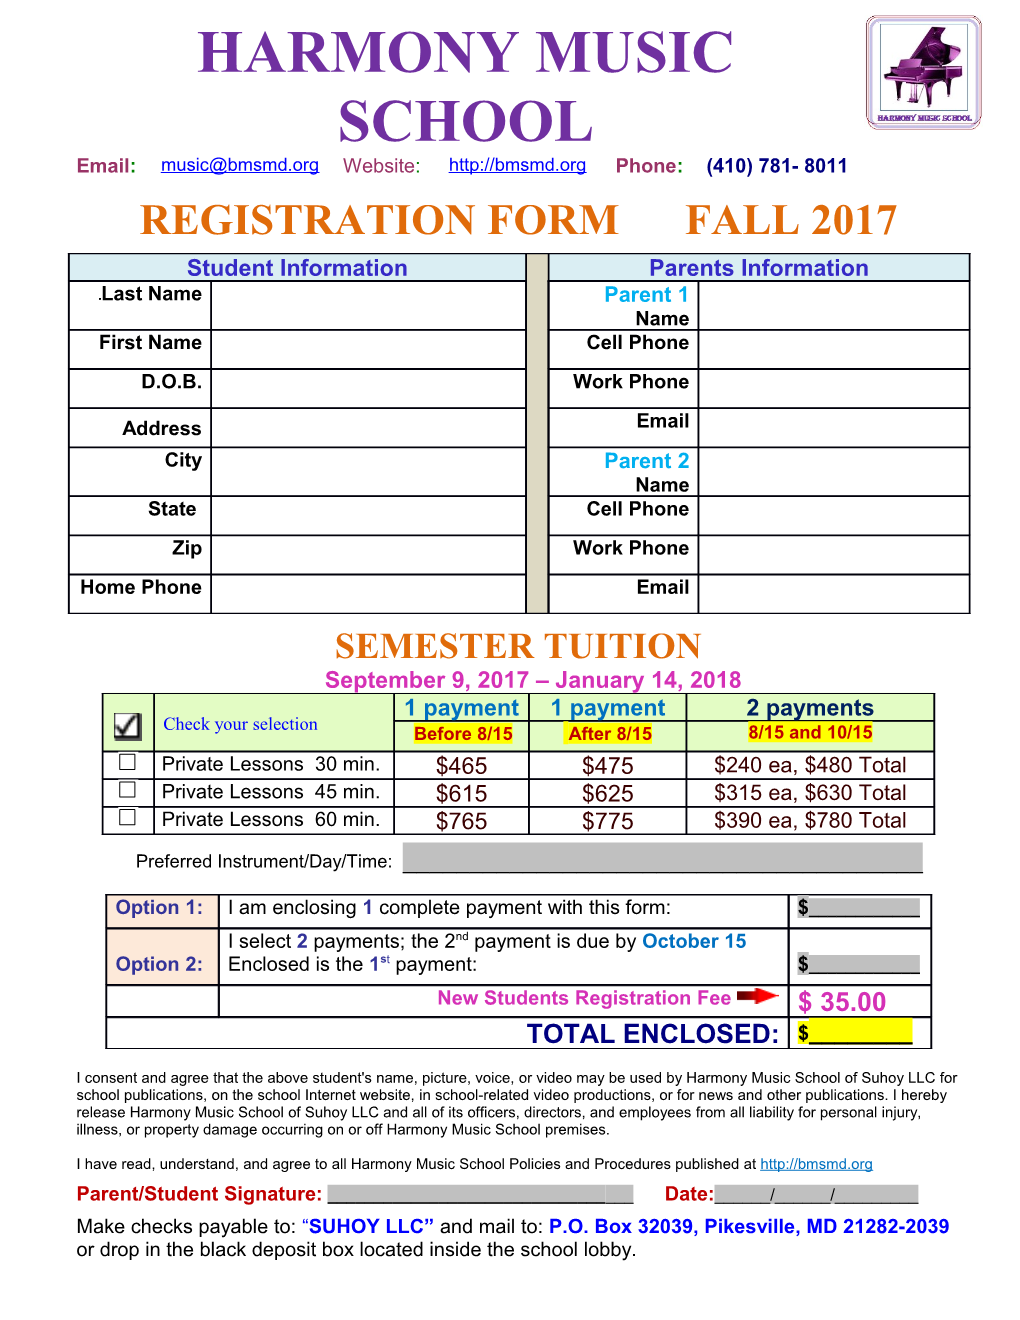 Registration Form Fall 2017